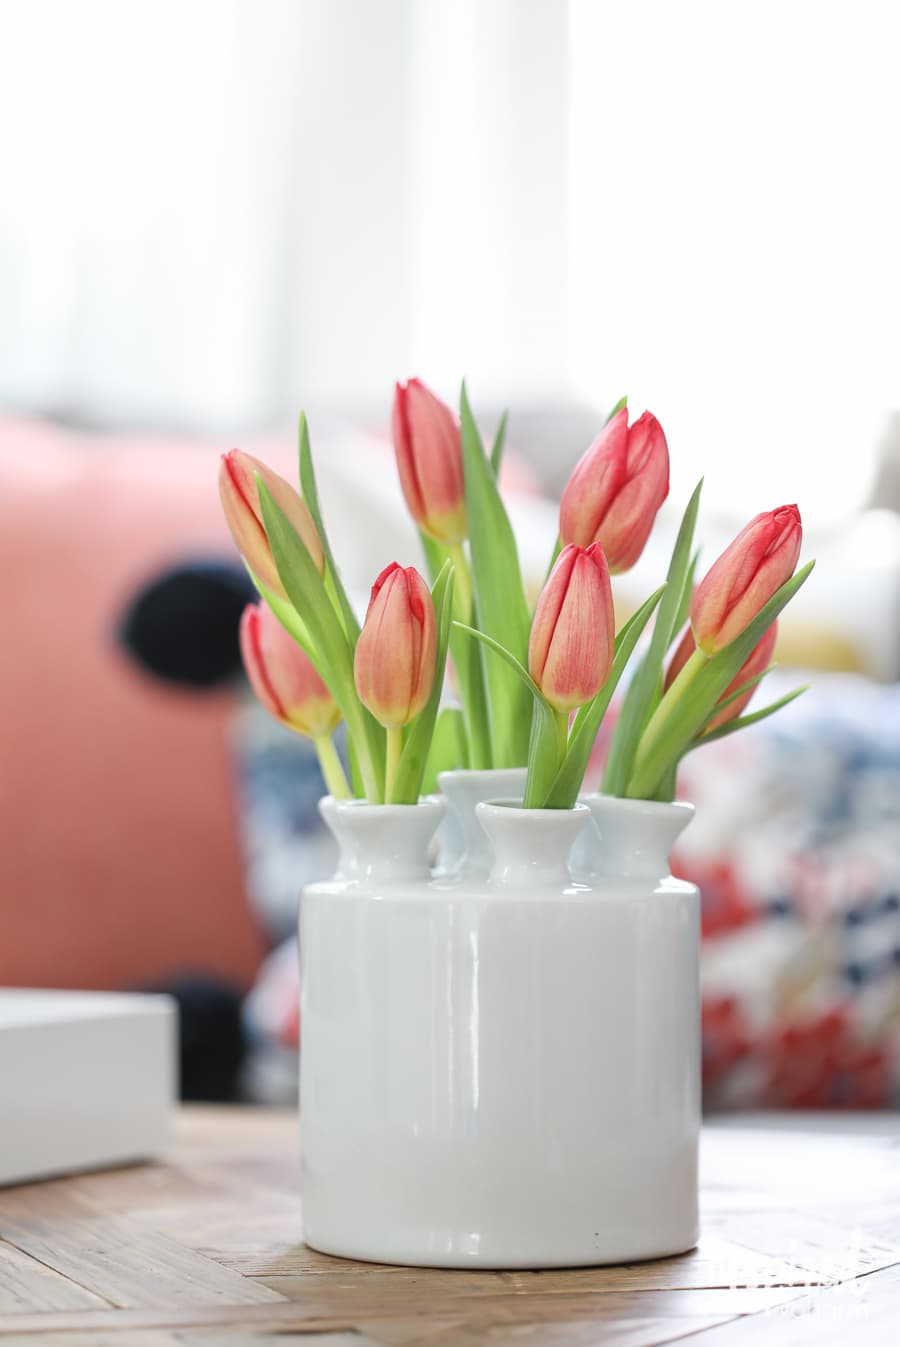 Tulipiere - Tulip Vase / Flower Vase for Flower Arranging